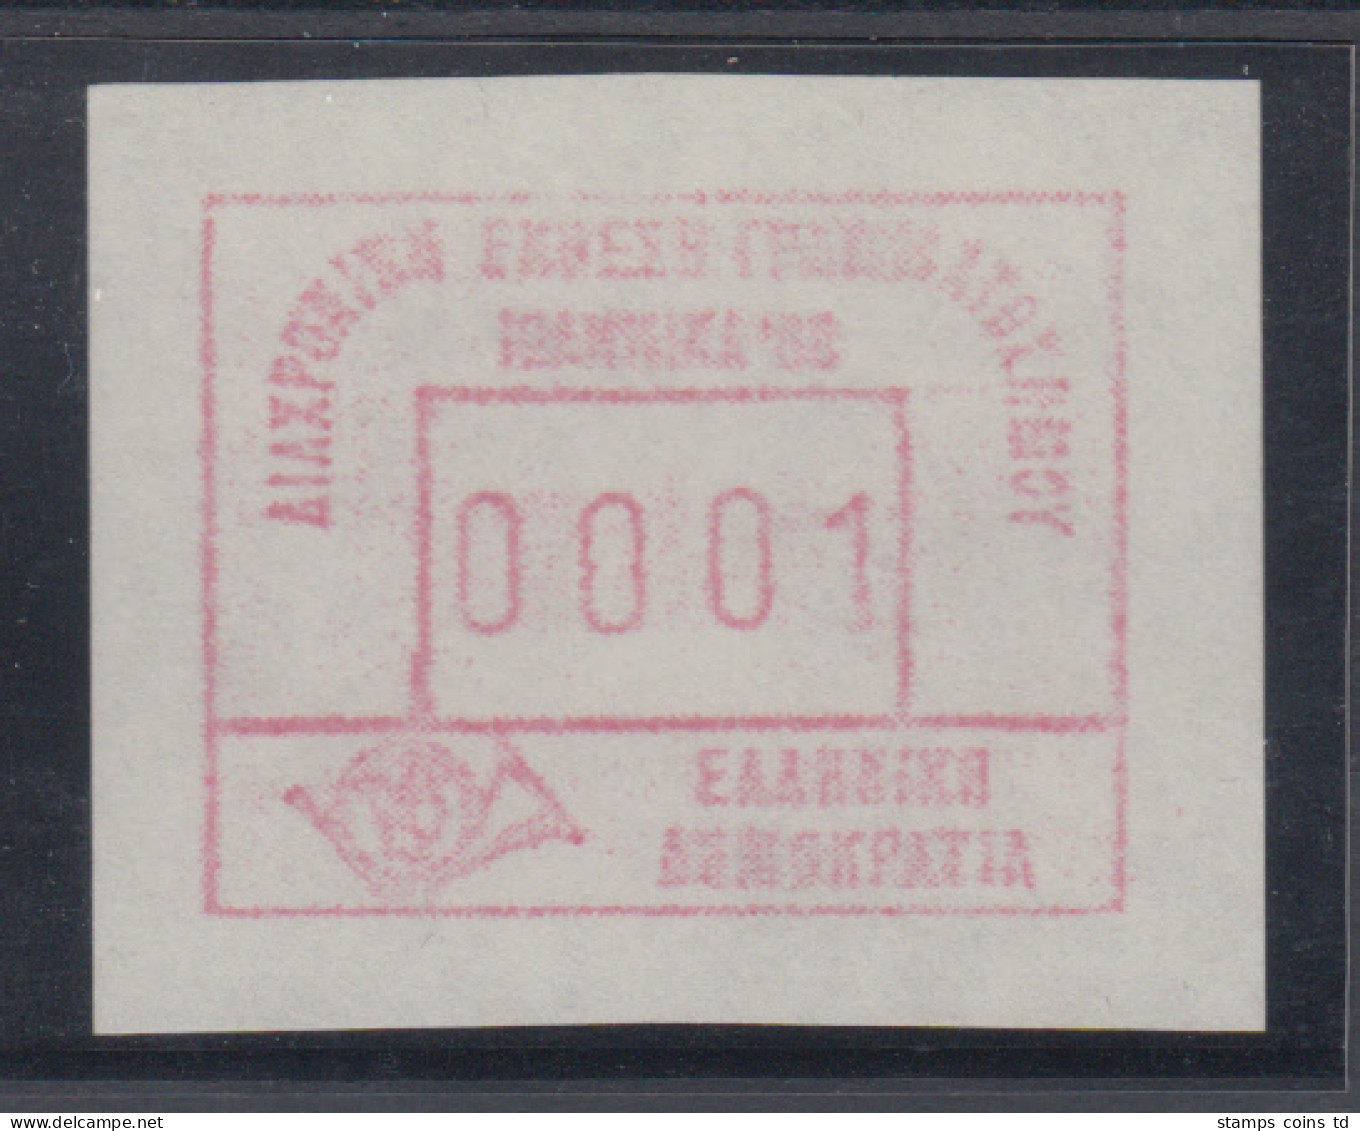 Griechenland: Frama-ATM Sonderausgabe IOANNINA`88 **  W-Papier, Mi.-Nr. 7 Wc - Timbres De Distributeurs [ATM]